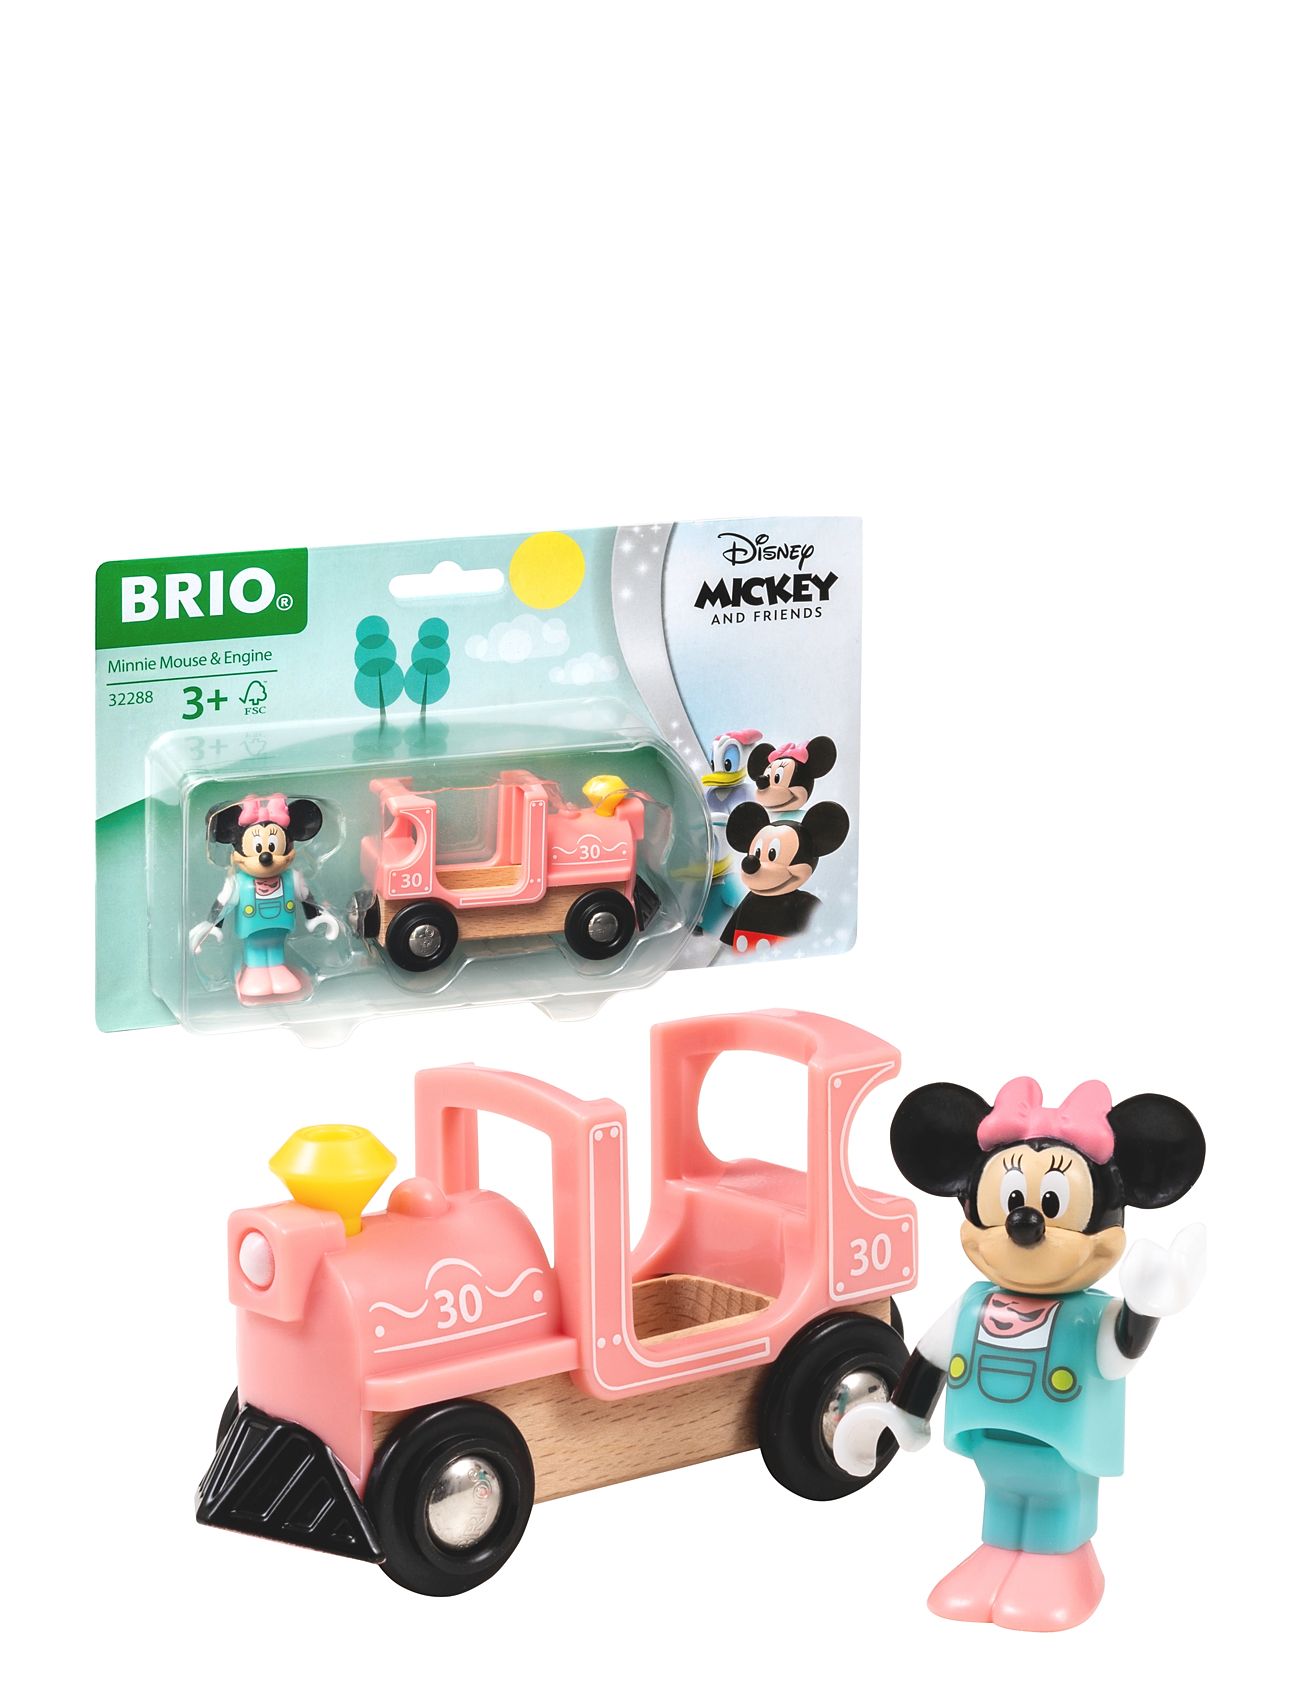 Brio 32288 Minnie Mouse Og Lokomotiv Toys Toy Cars & Vehicles Toy Vehicles Trains Multi/patterned BRIO